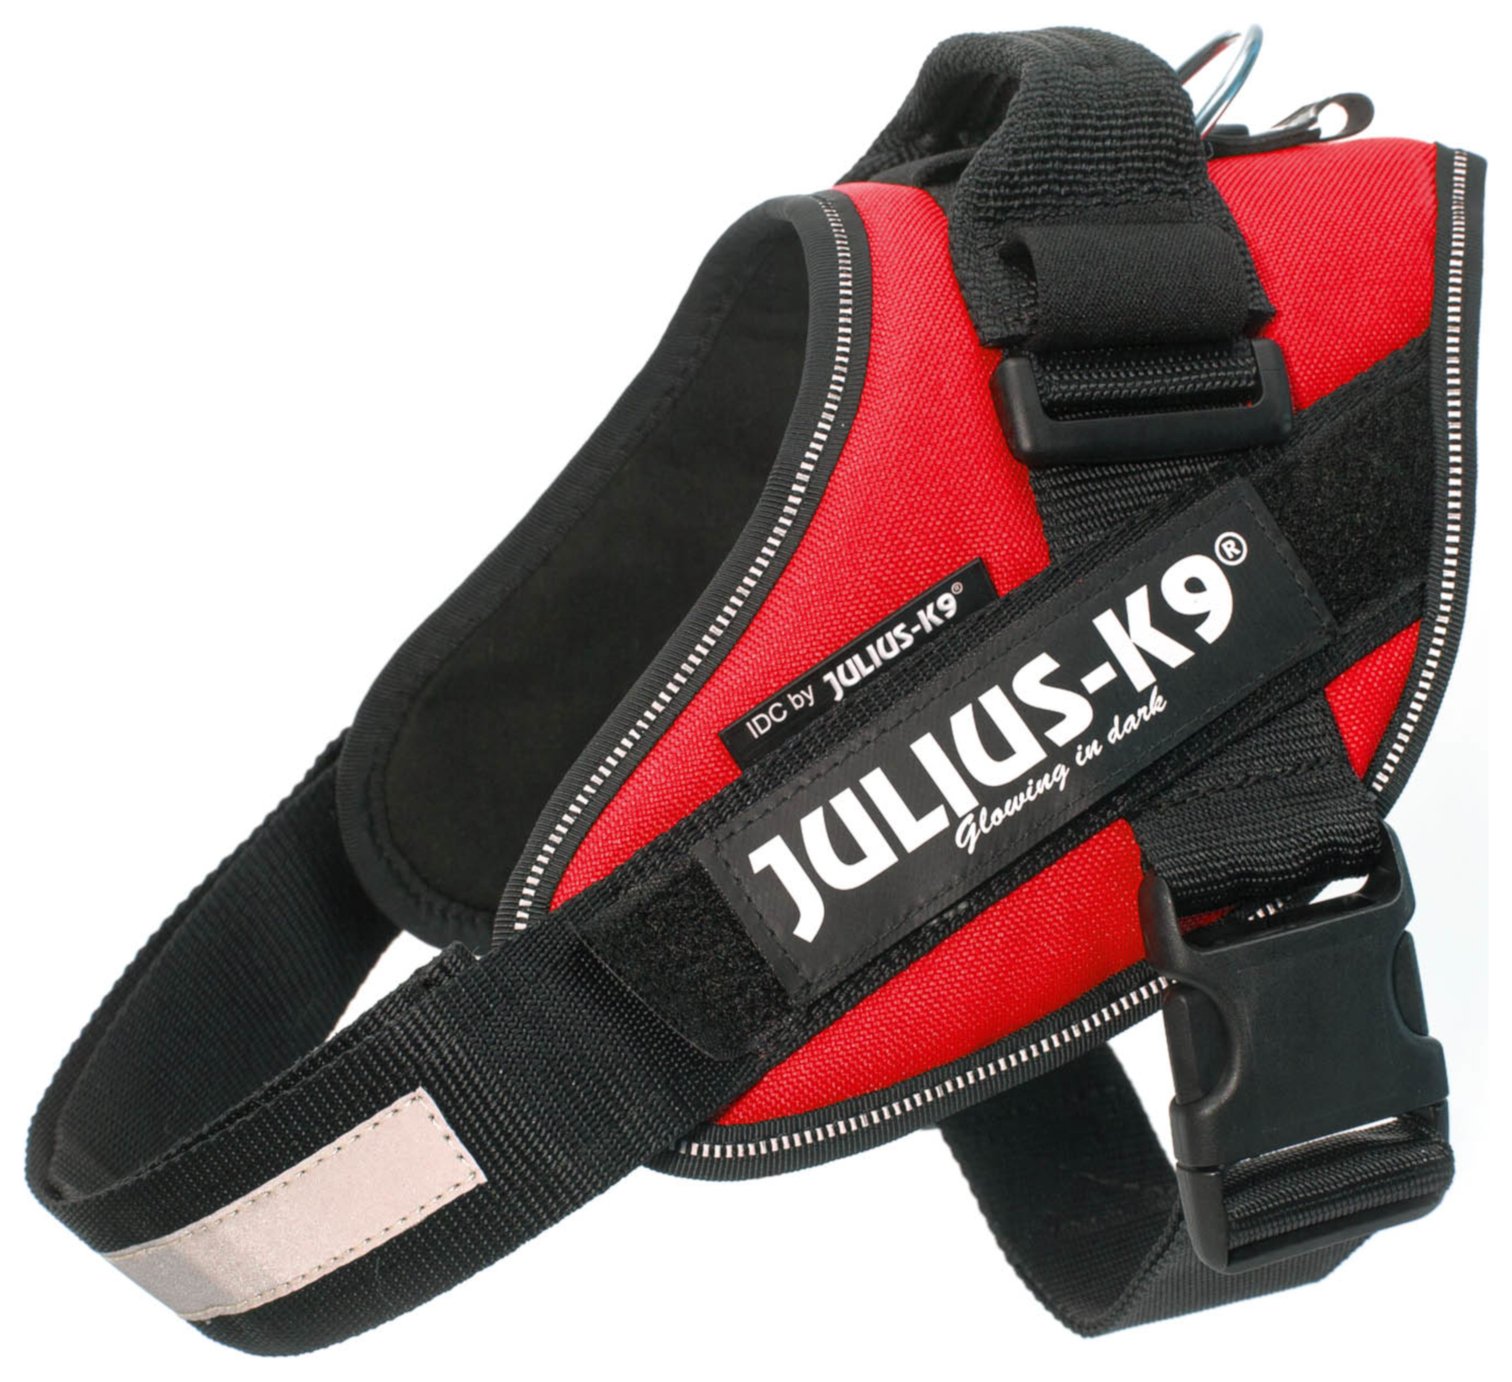 Julius-K9 IDC Power Harness - Red 0